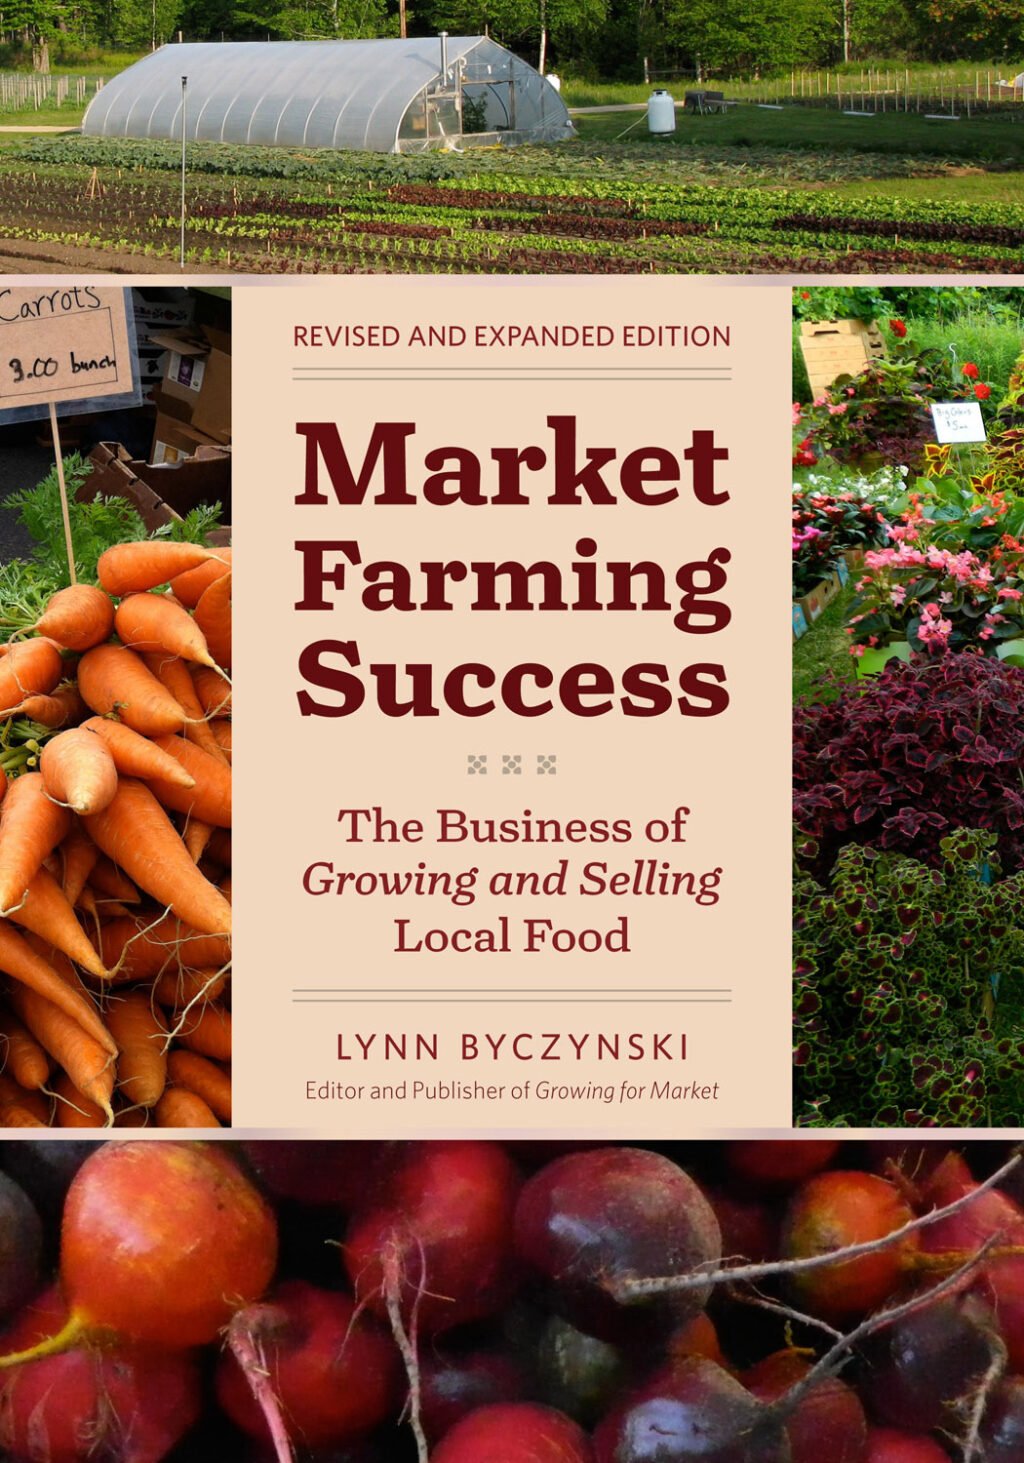 The Market Farming Success cover